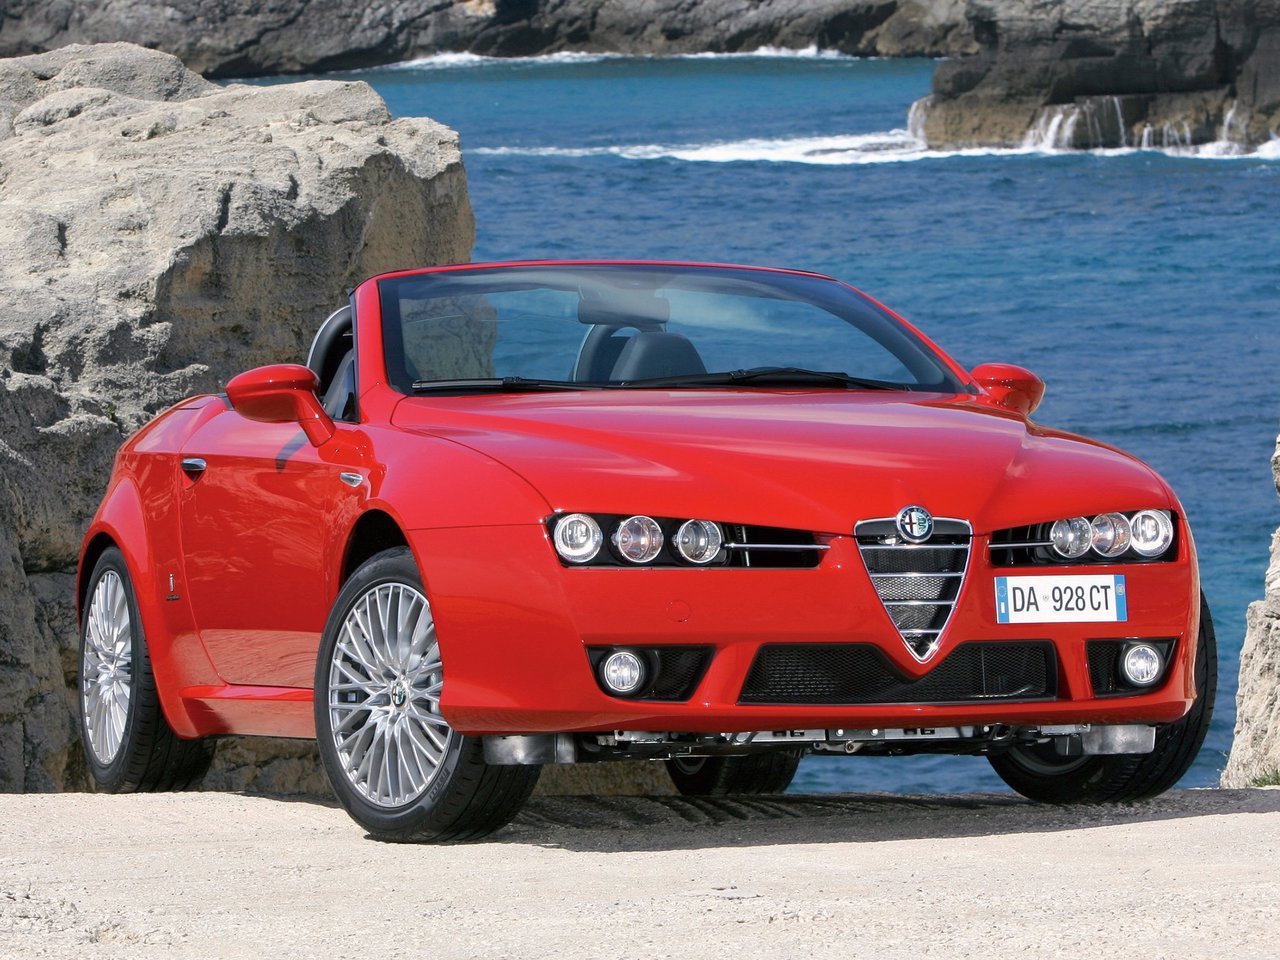 Расход газа шести комплектаций кабриолета Alfa Romeo Spider. Разница стоимости заправки газом и бензином. Автономный пробег до и после установки ГБО.